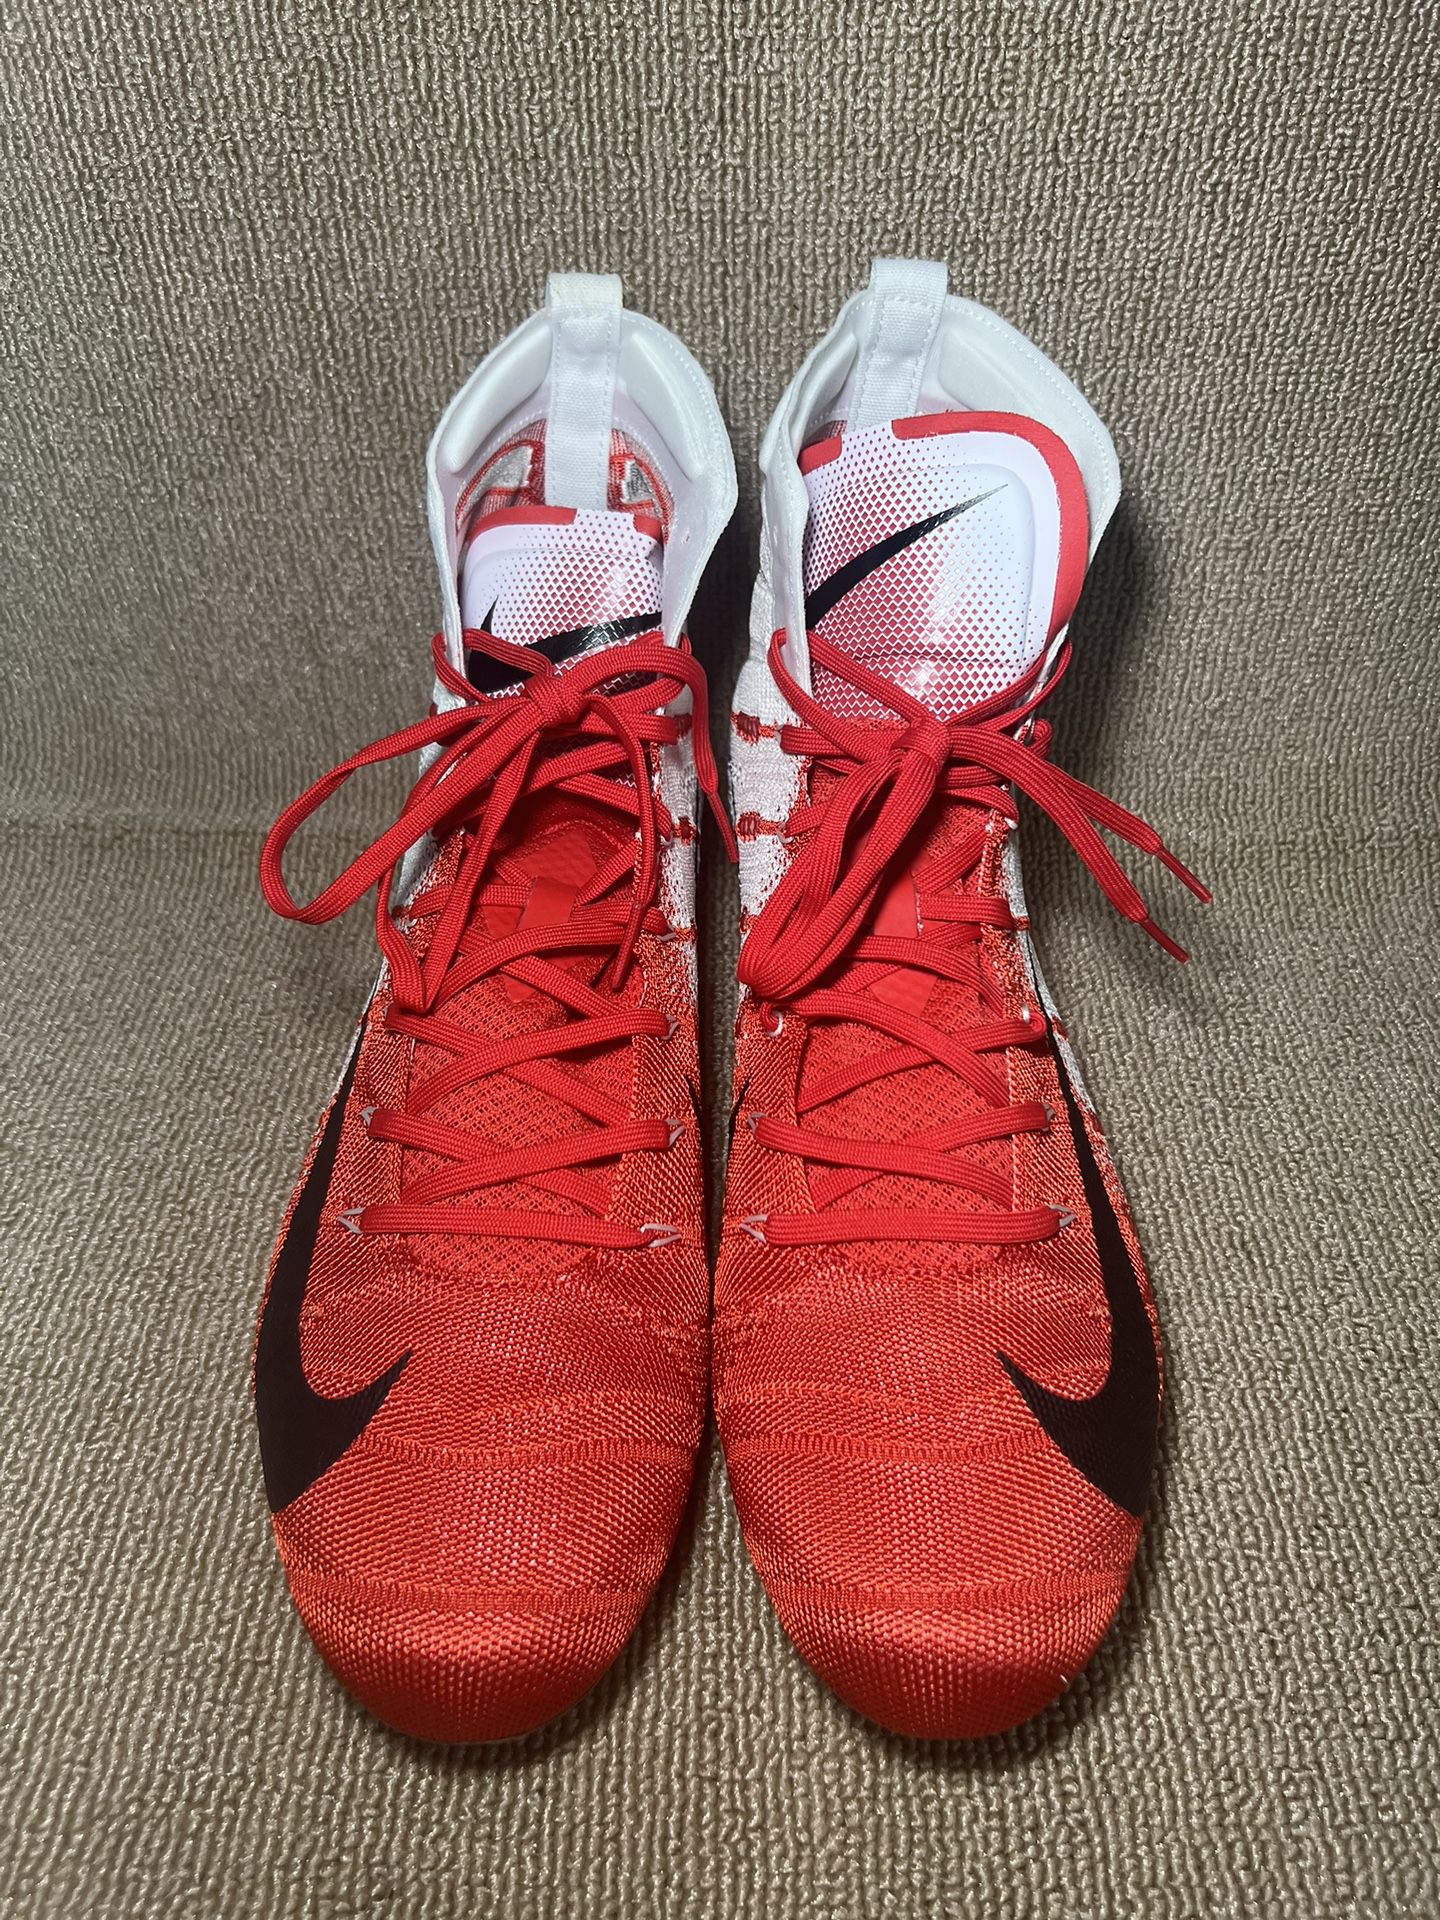 Men's 15 Nike Vapor Untouchable 3 Elite Football Cleats White Red AO3006-160